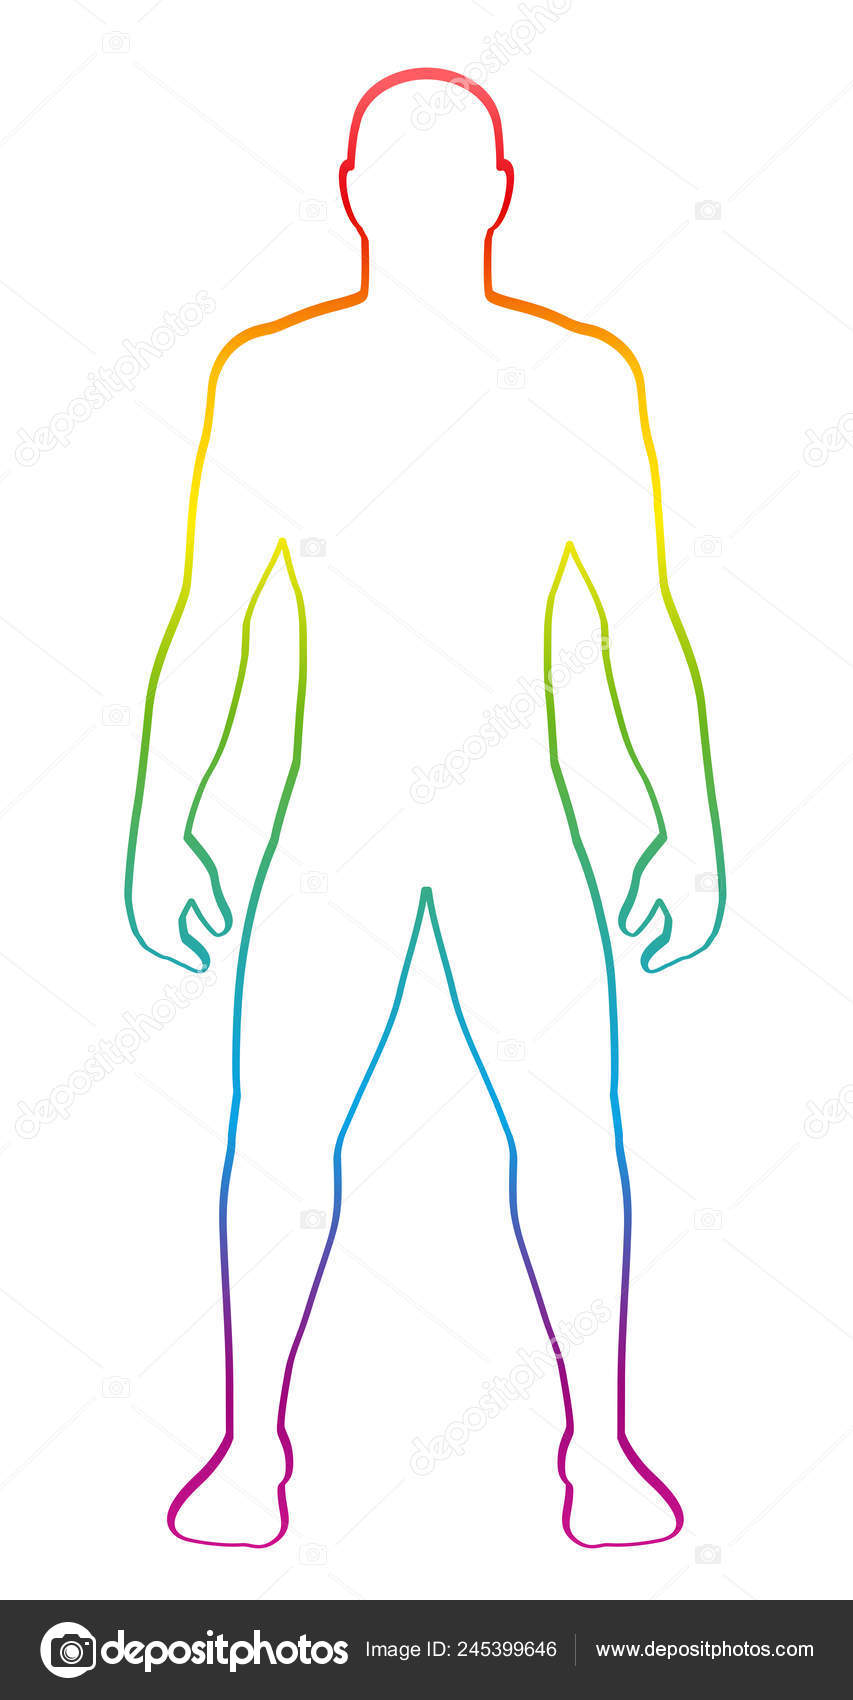 https://st4.depositphotos.com/2465573/24539/v/1600/depositphotos_245399646-stock-illustration-male-muscular-body-shape-rainbow.jpg